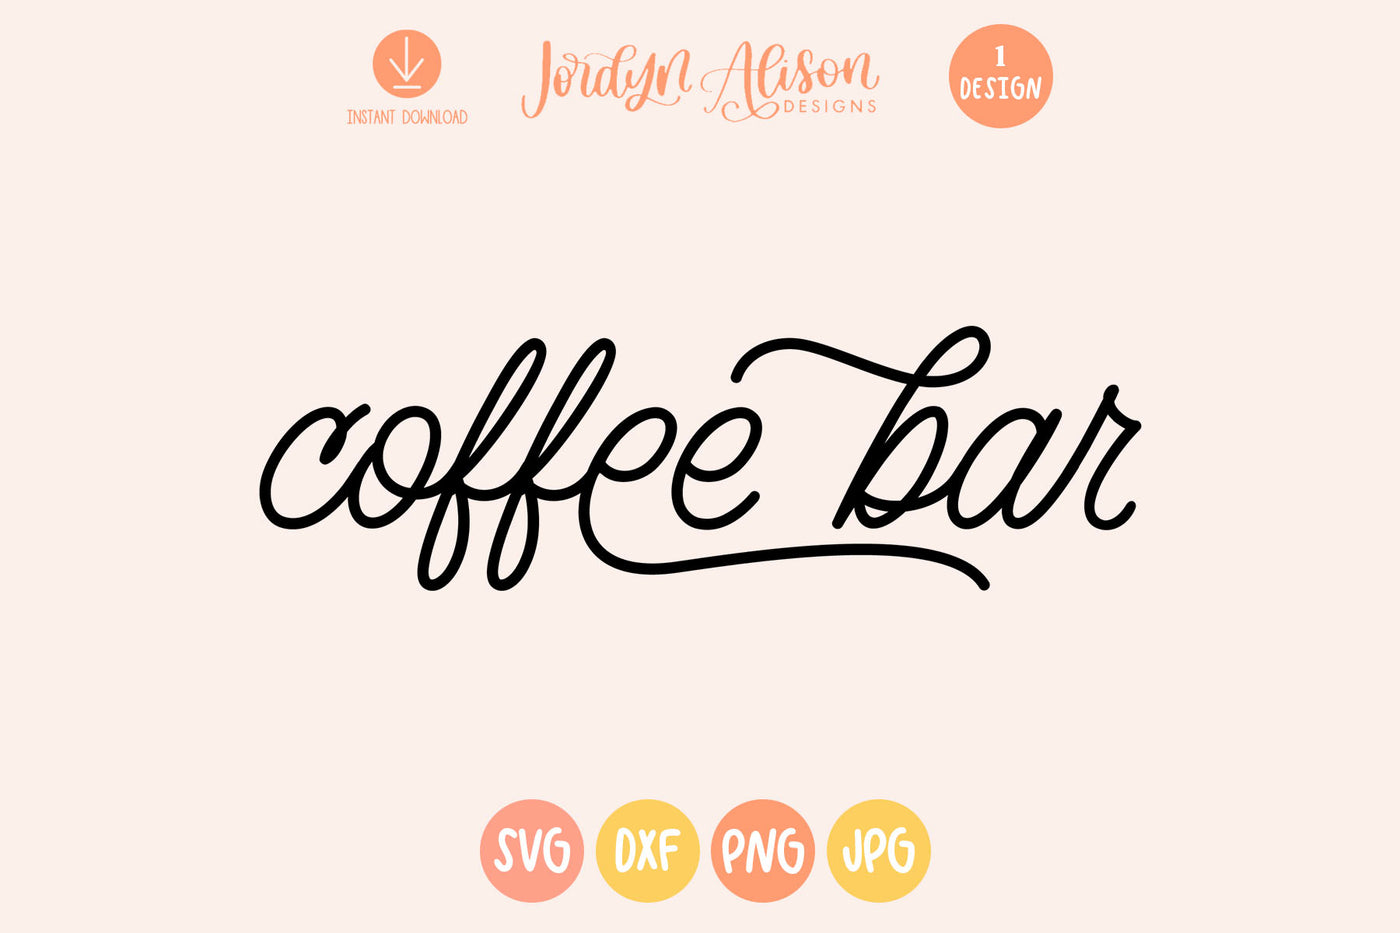 Coffee Bar SVG